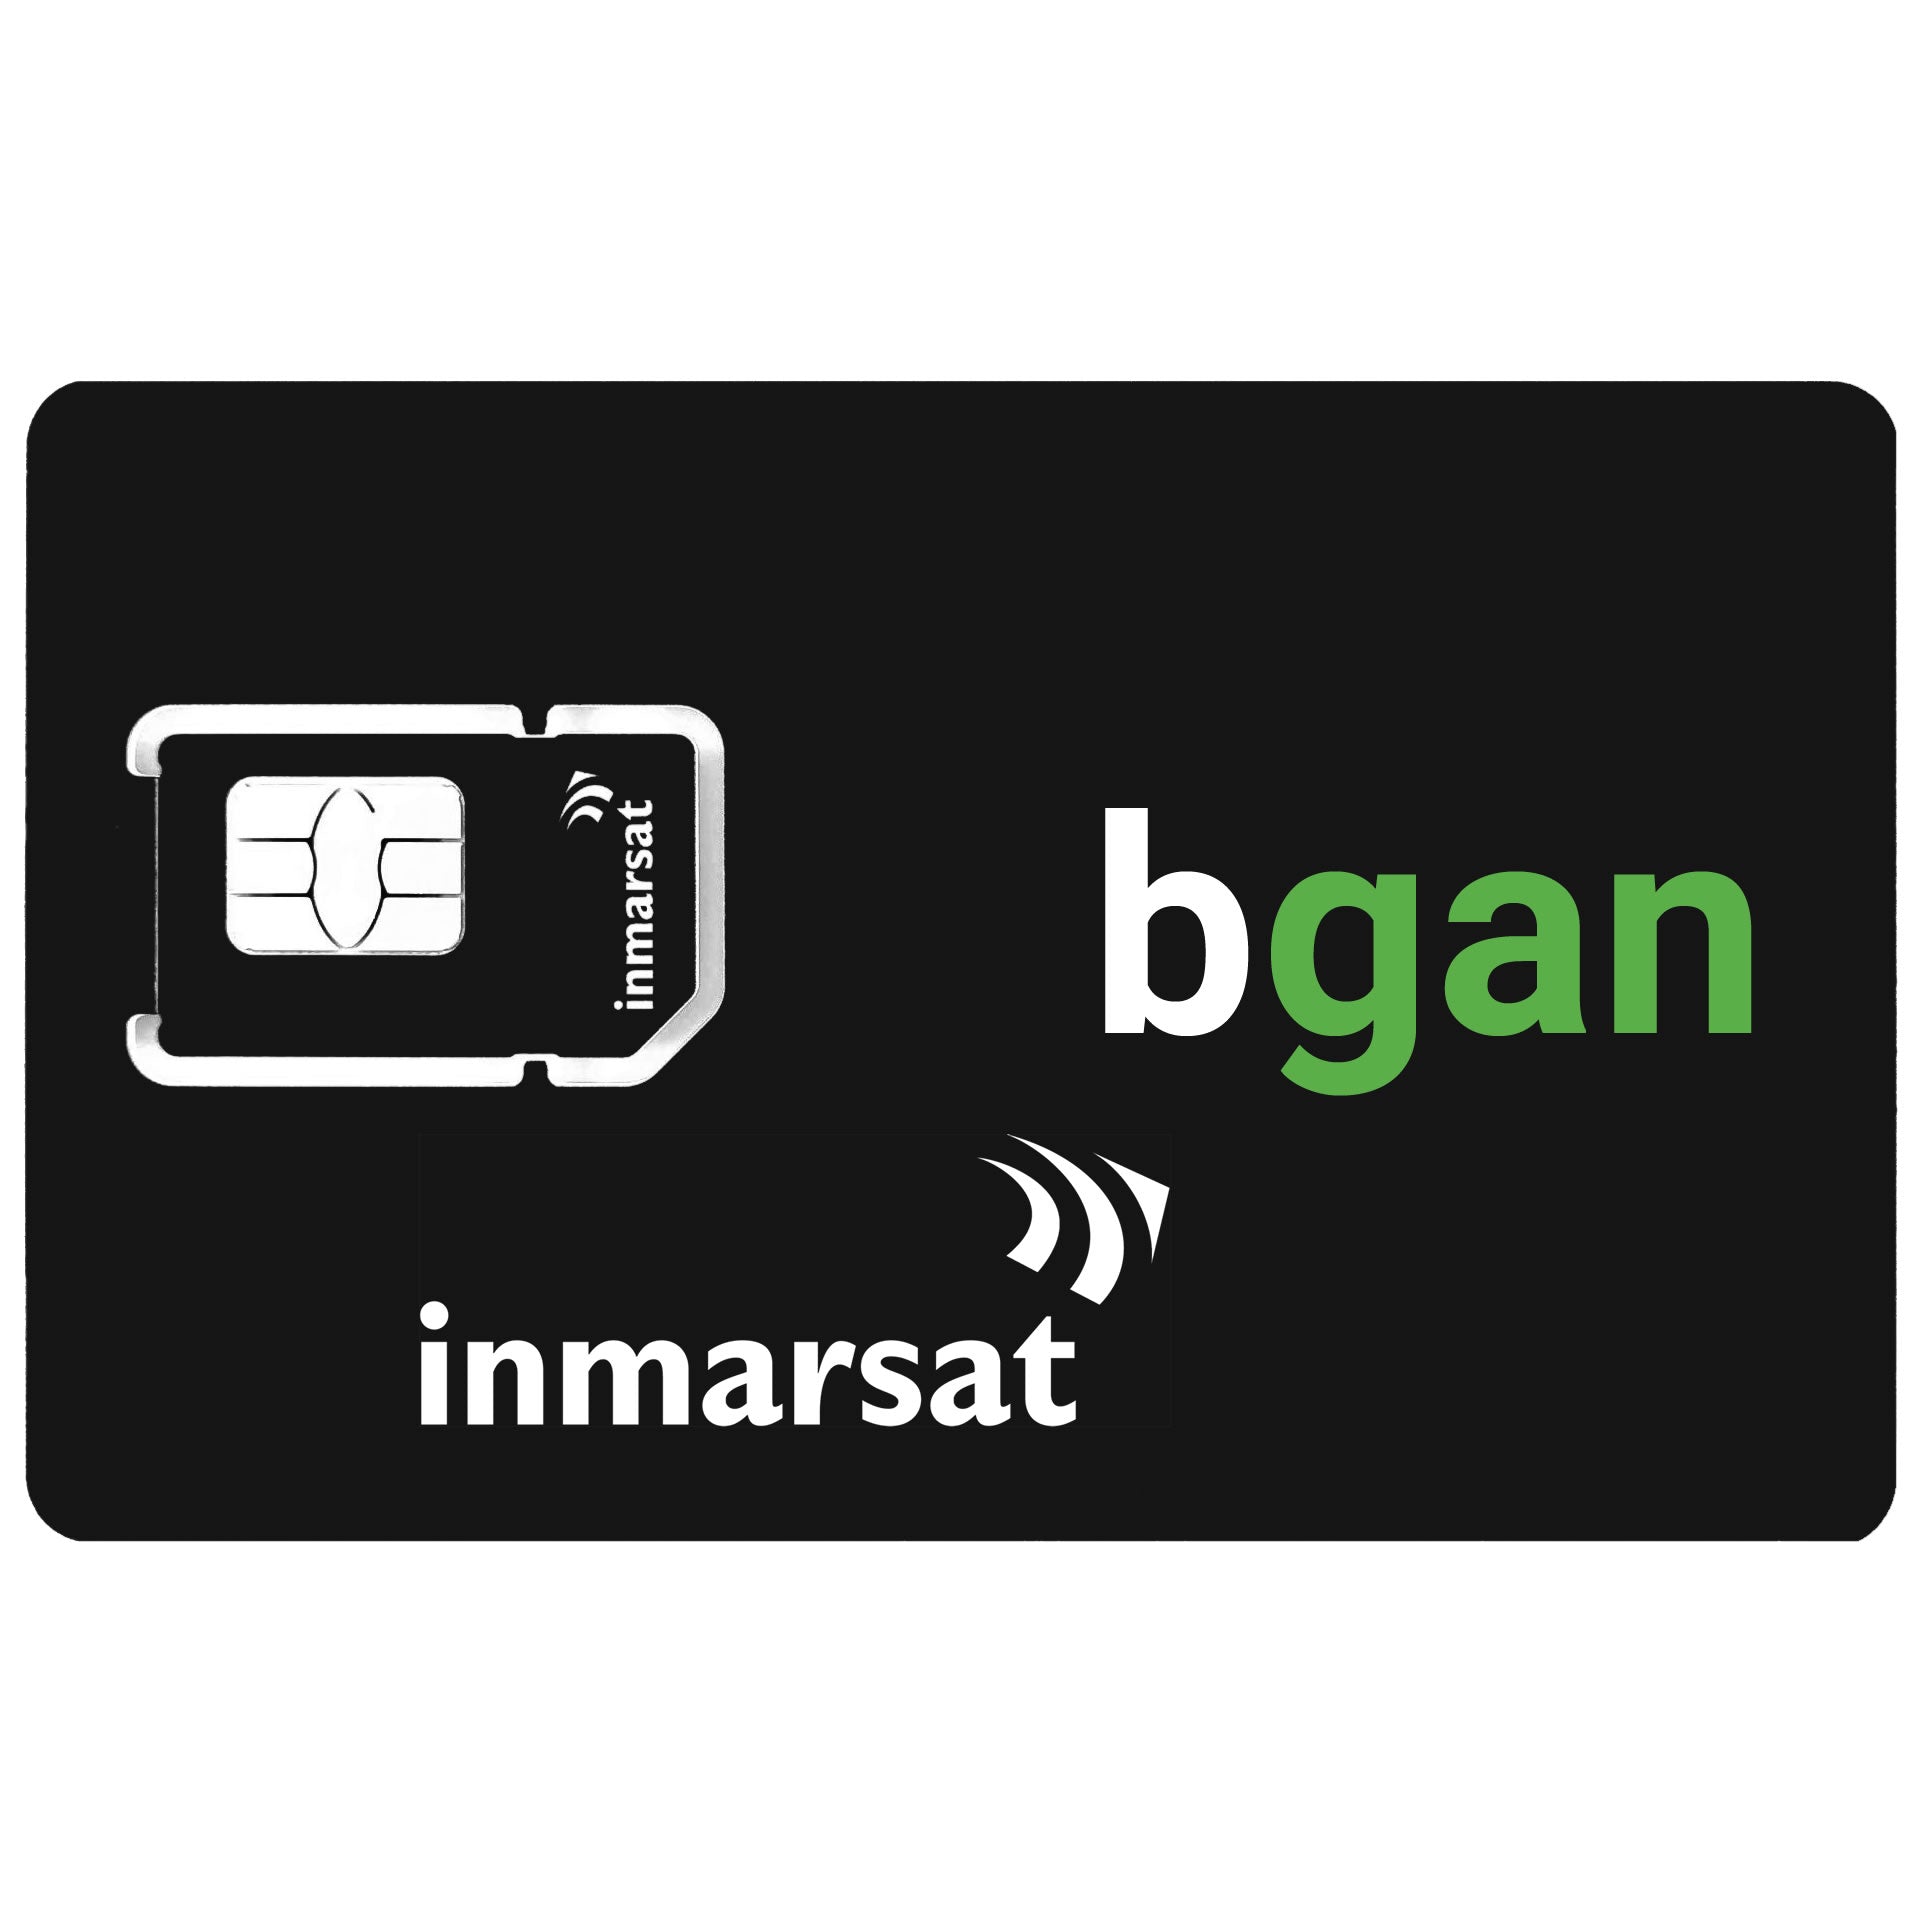 INMARSAT Prepaid-Karte, wiederaufladbar BGAN/IsatHub - 500 UNITS - 180 TAGE